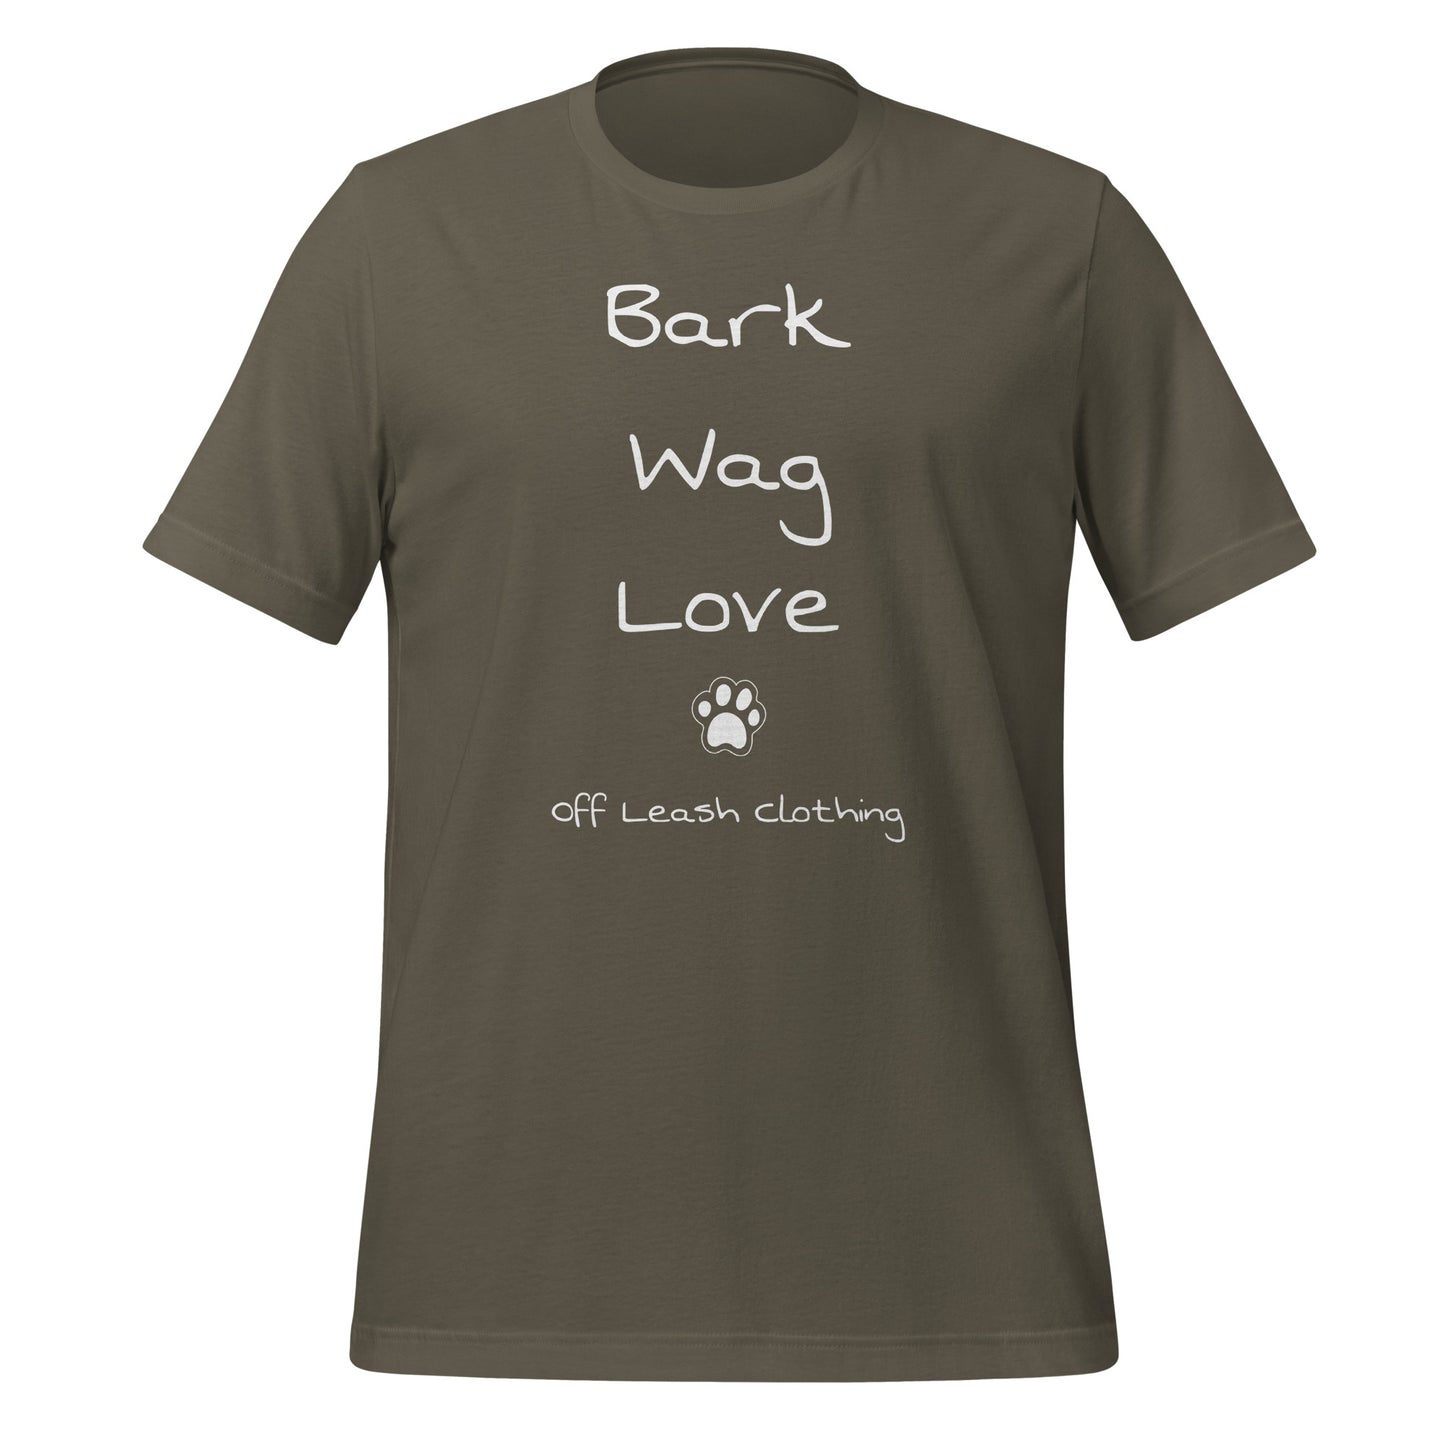 Bark Wag Love || OLC - Light Weight, Slimmer fit Unisex t-shirt